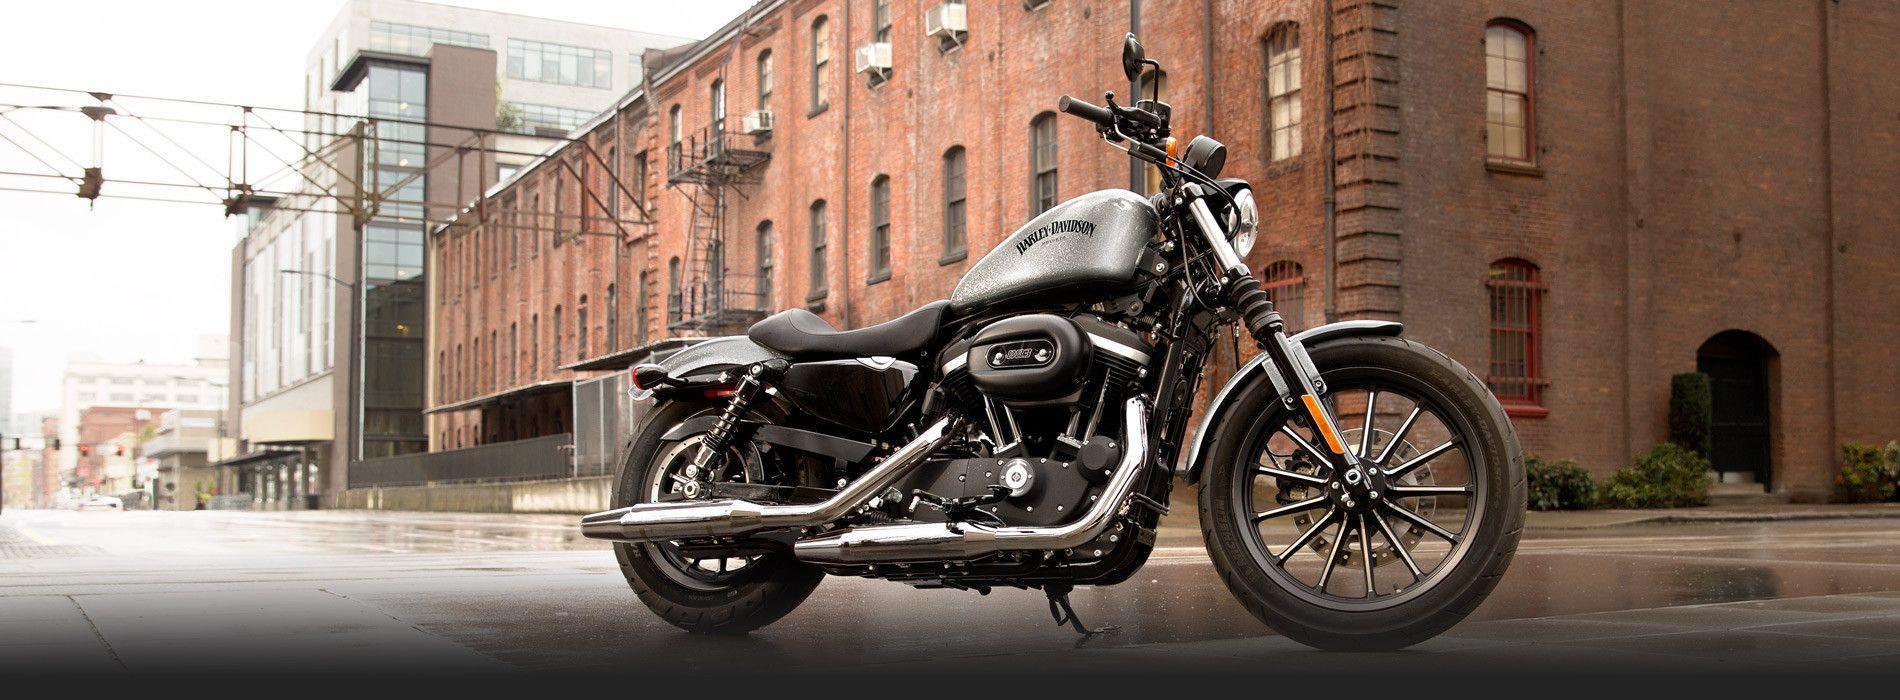 Sportster Iron 883. Bobber Motorcycle. Harley Davidson USA